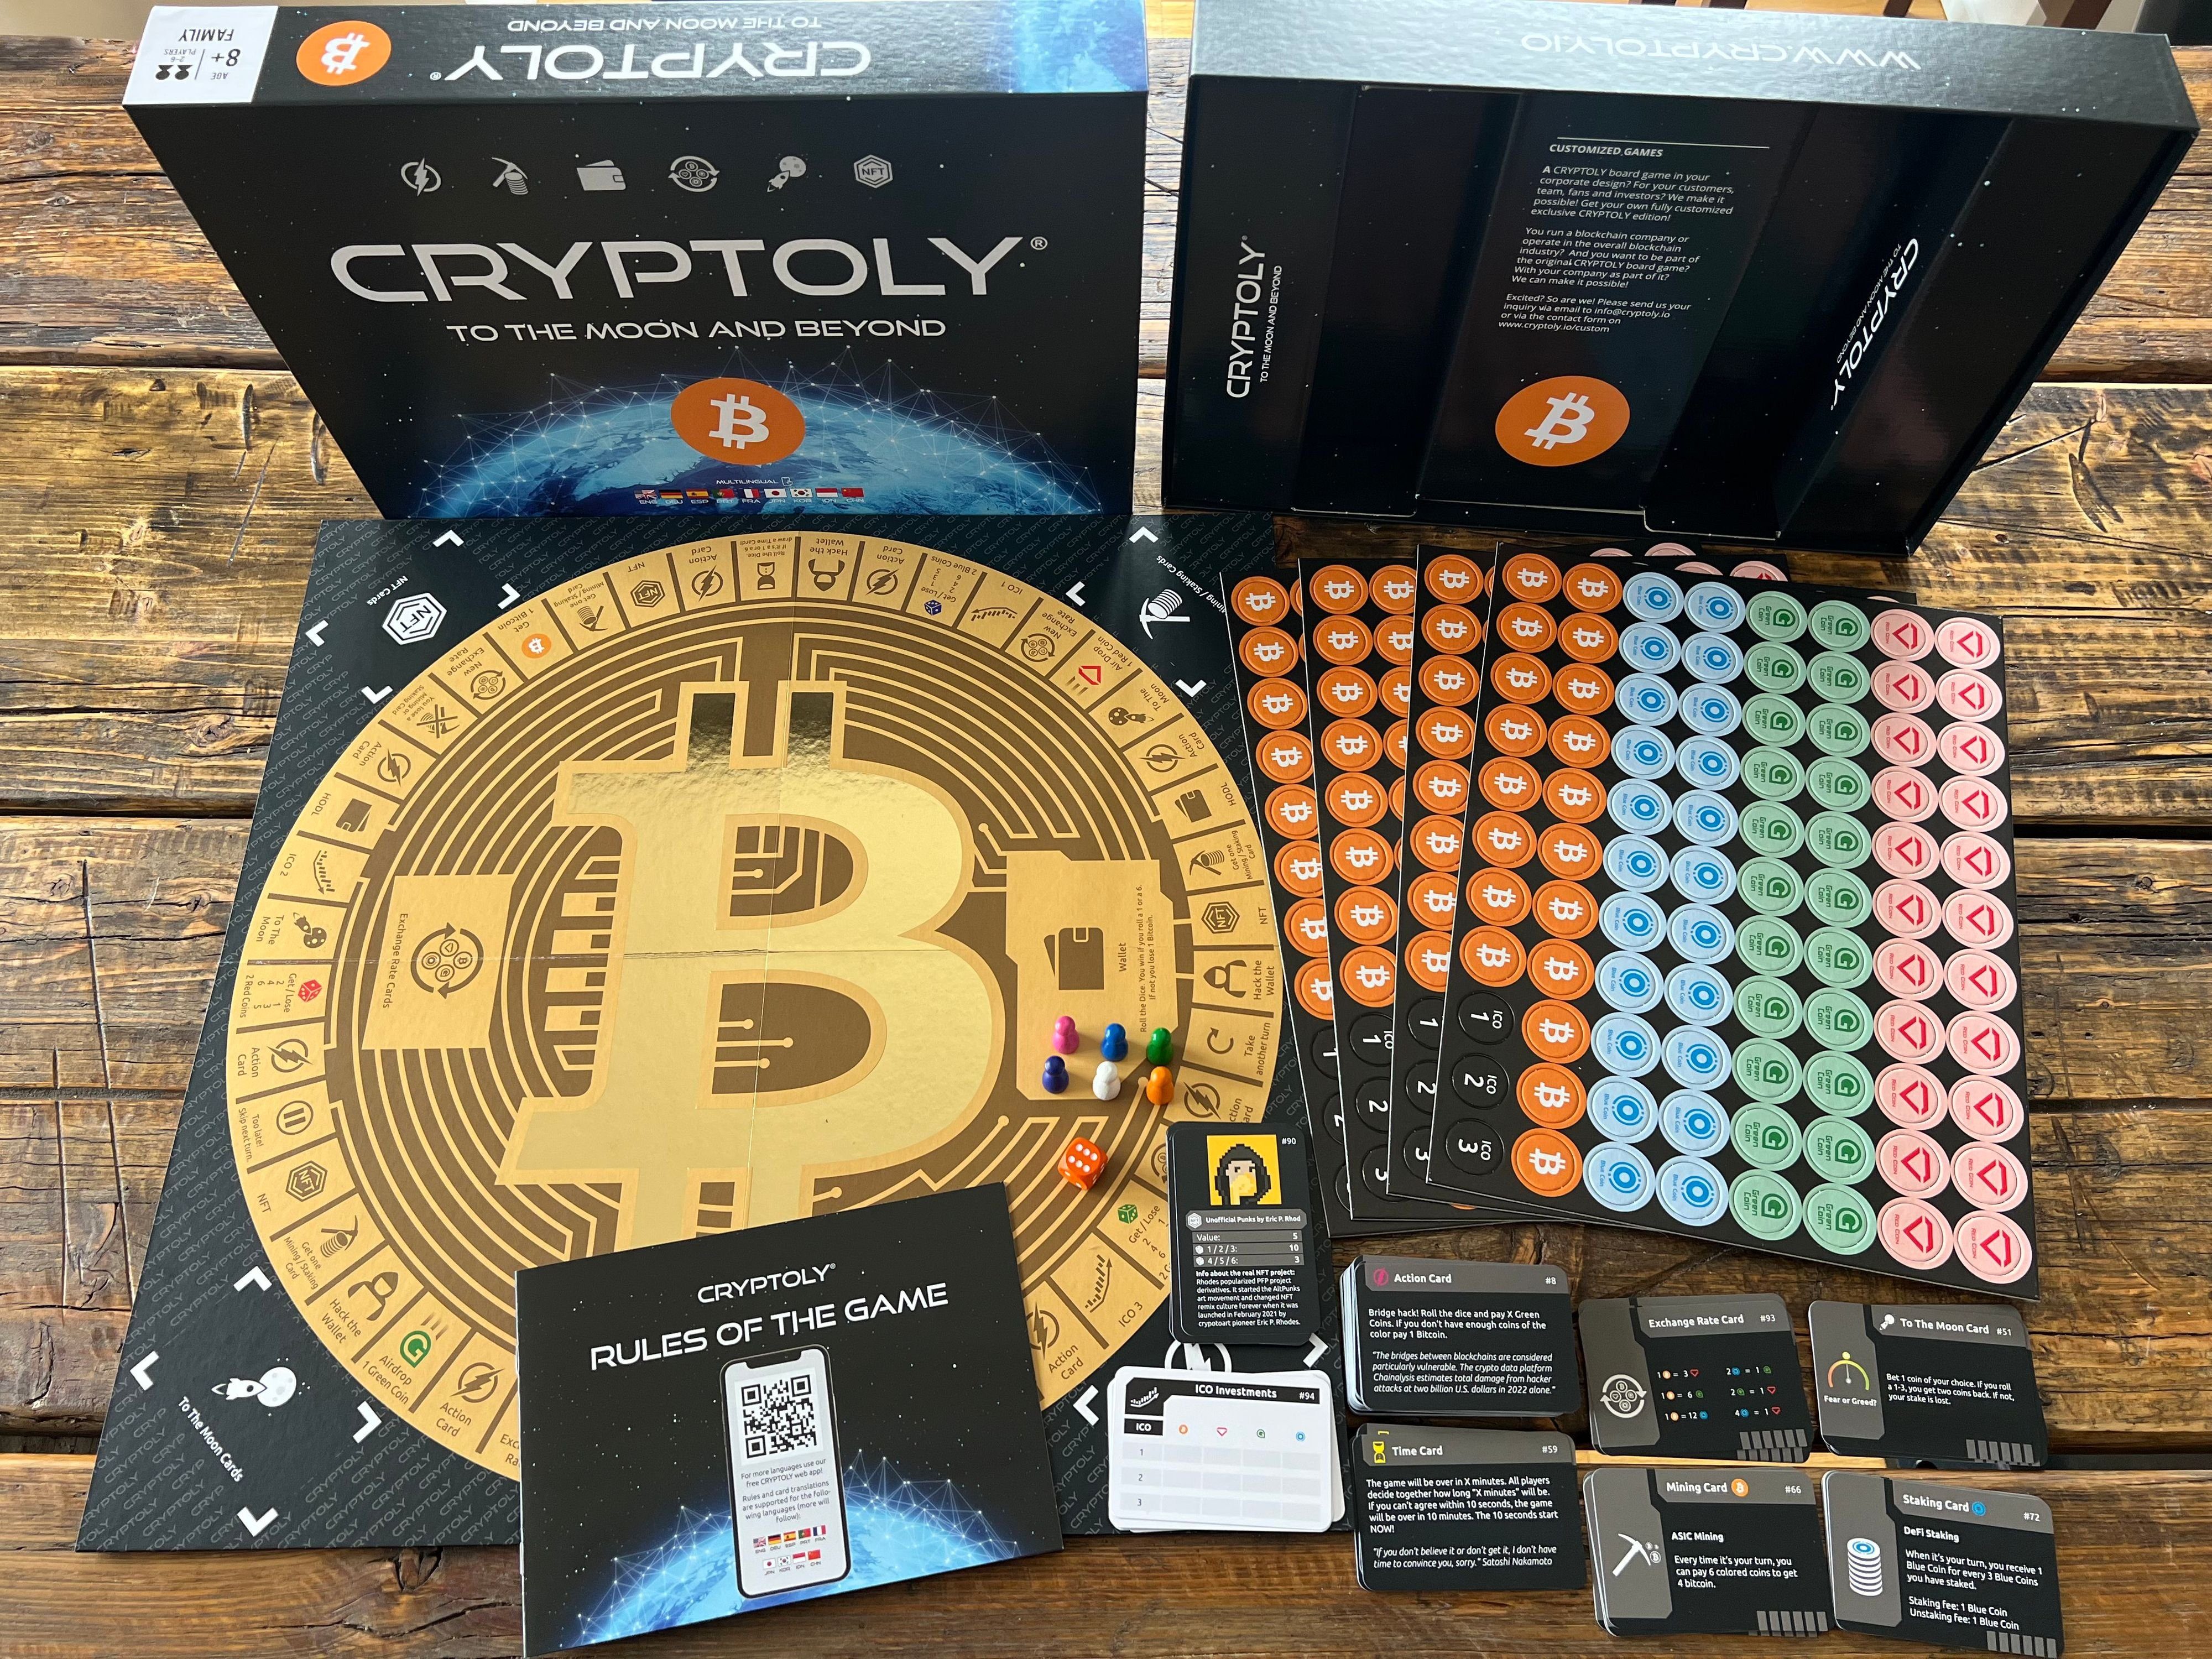 Das CRYPTOLY Beyond The Moon Bitcoin Gomazing And mehrsprachige Spiel, Brettspiel To